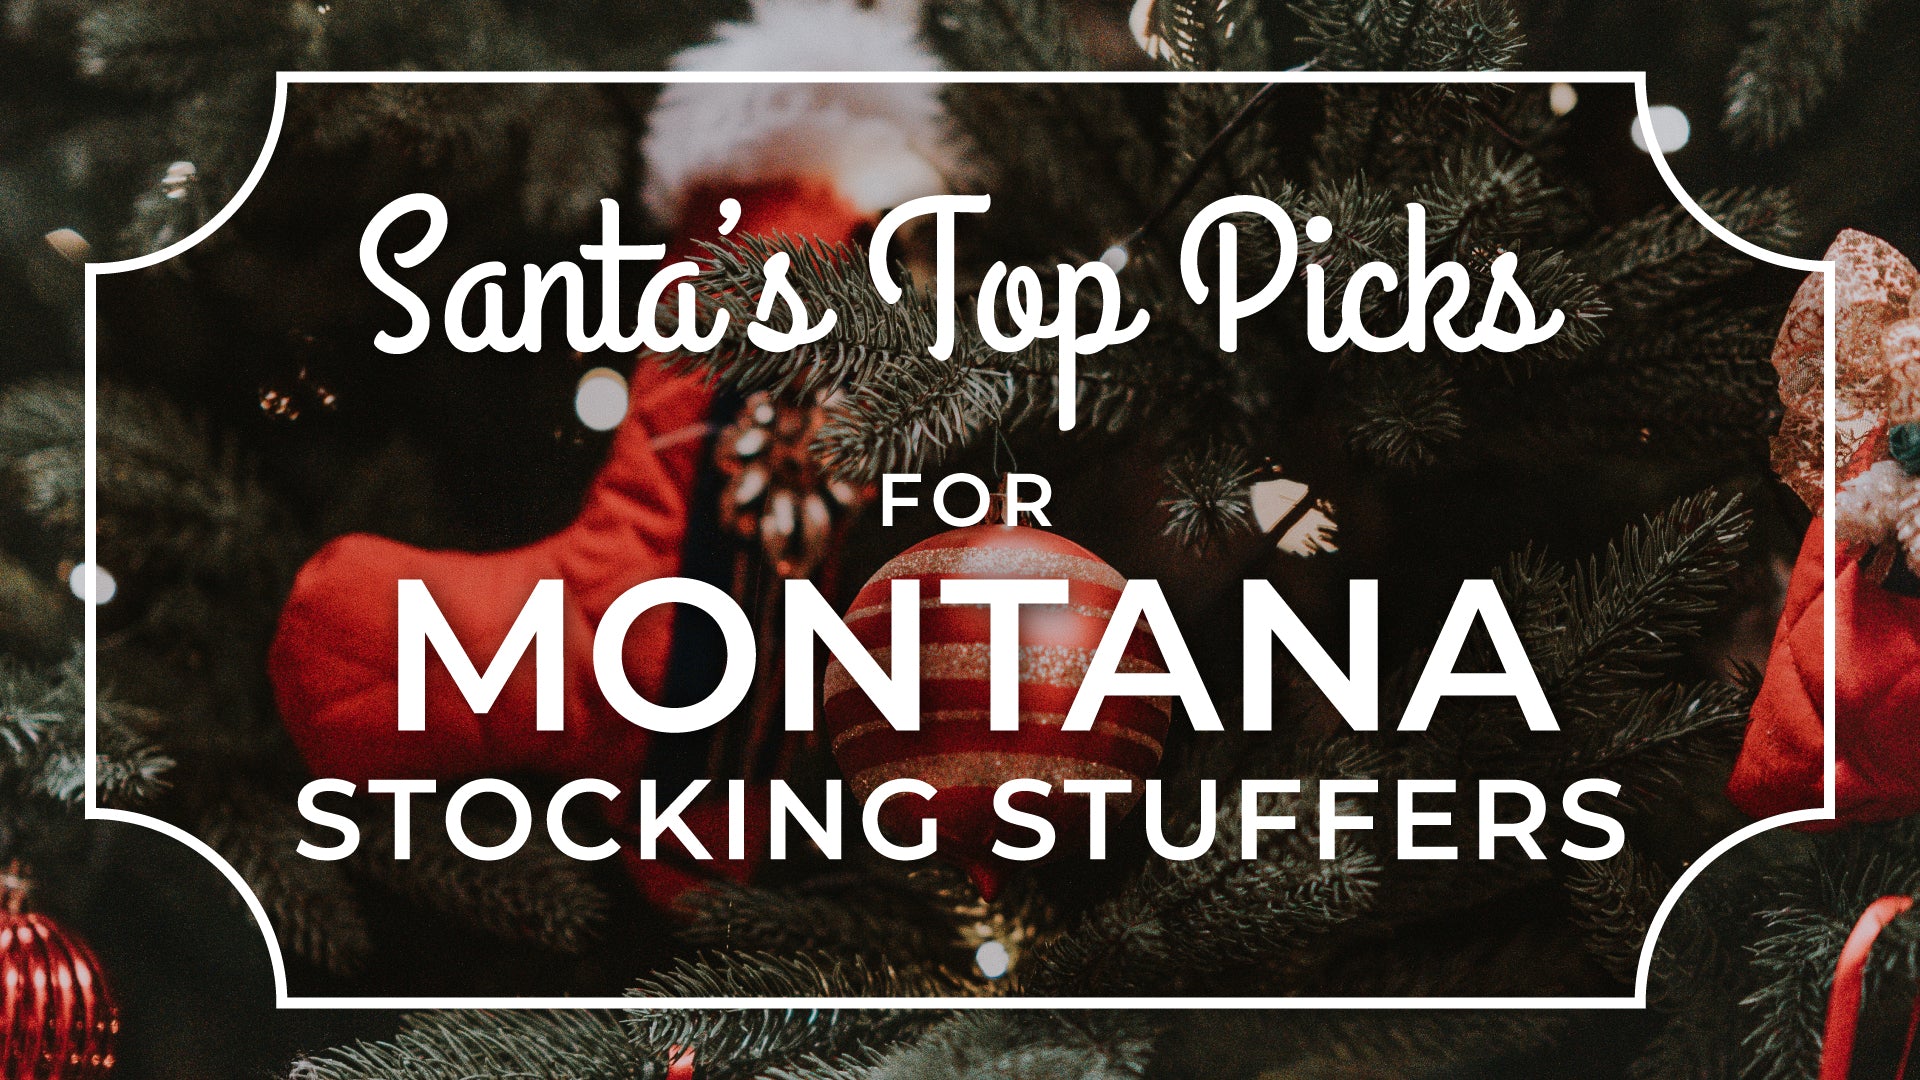 Santa's Picks for Montana Stocking Stuffers on Christmas Morning